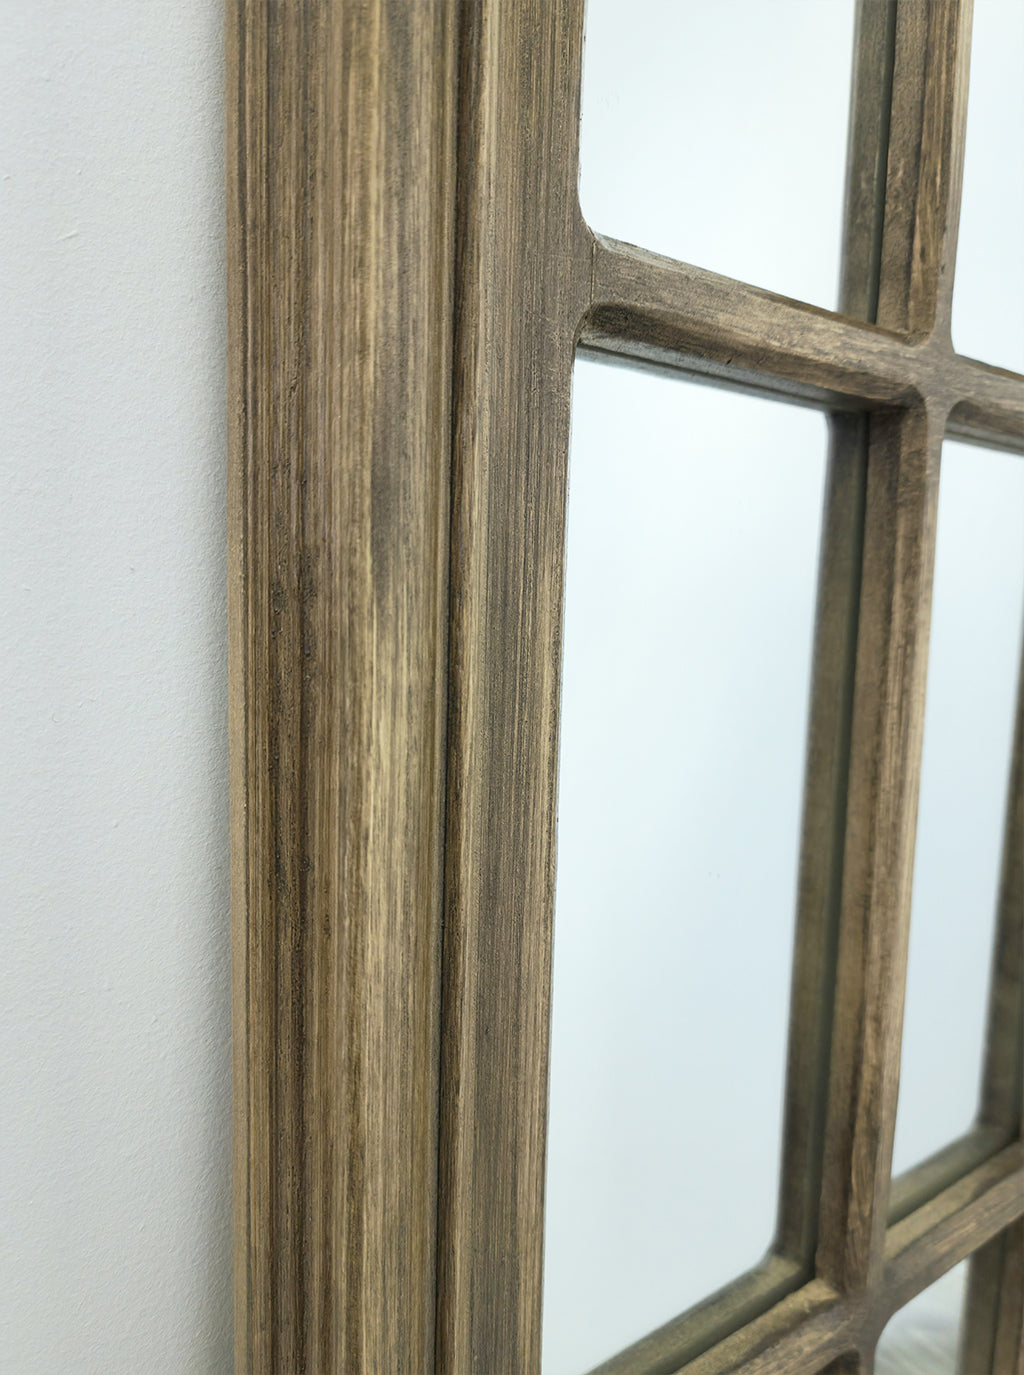 Window Style Mirror - Taupe Rectangle 95cm x 130cm